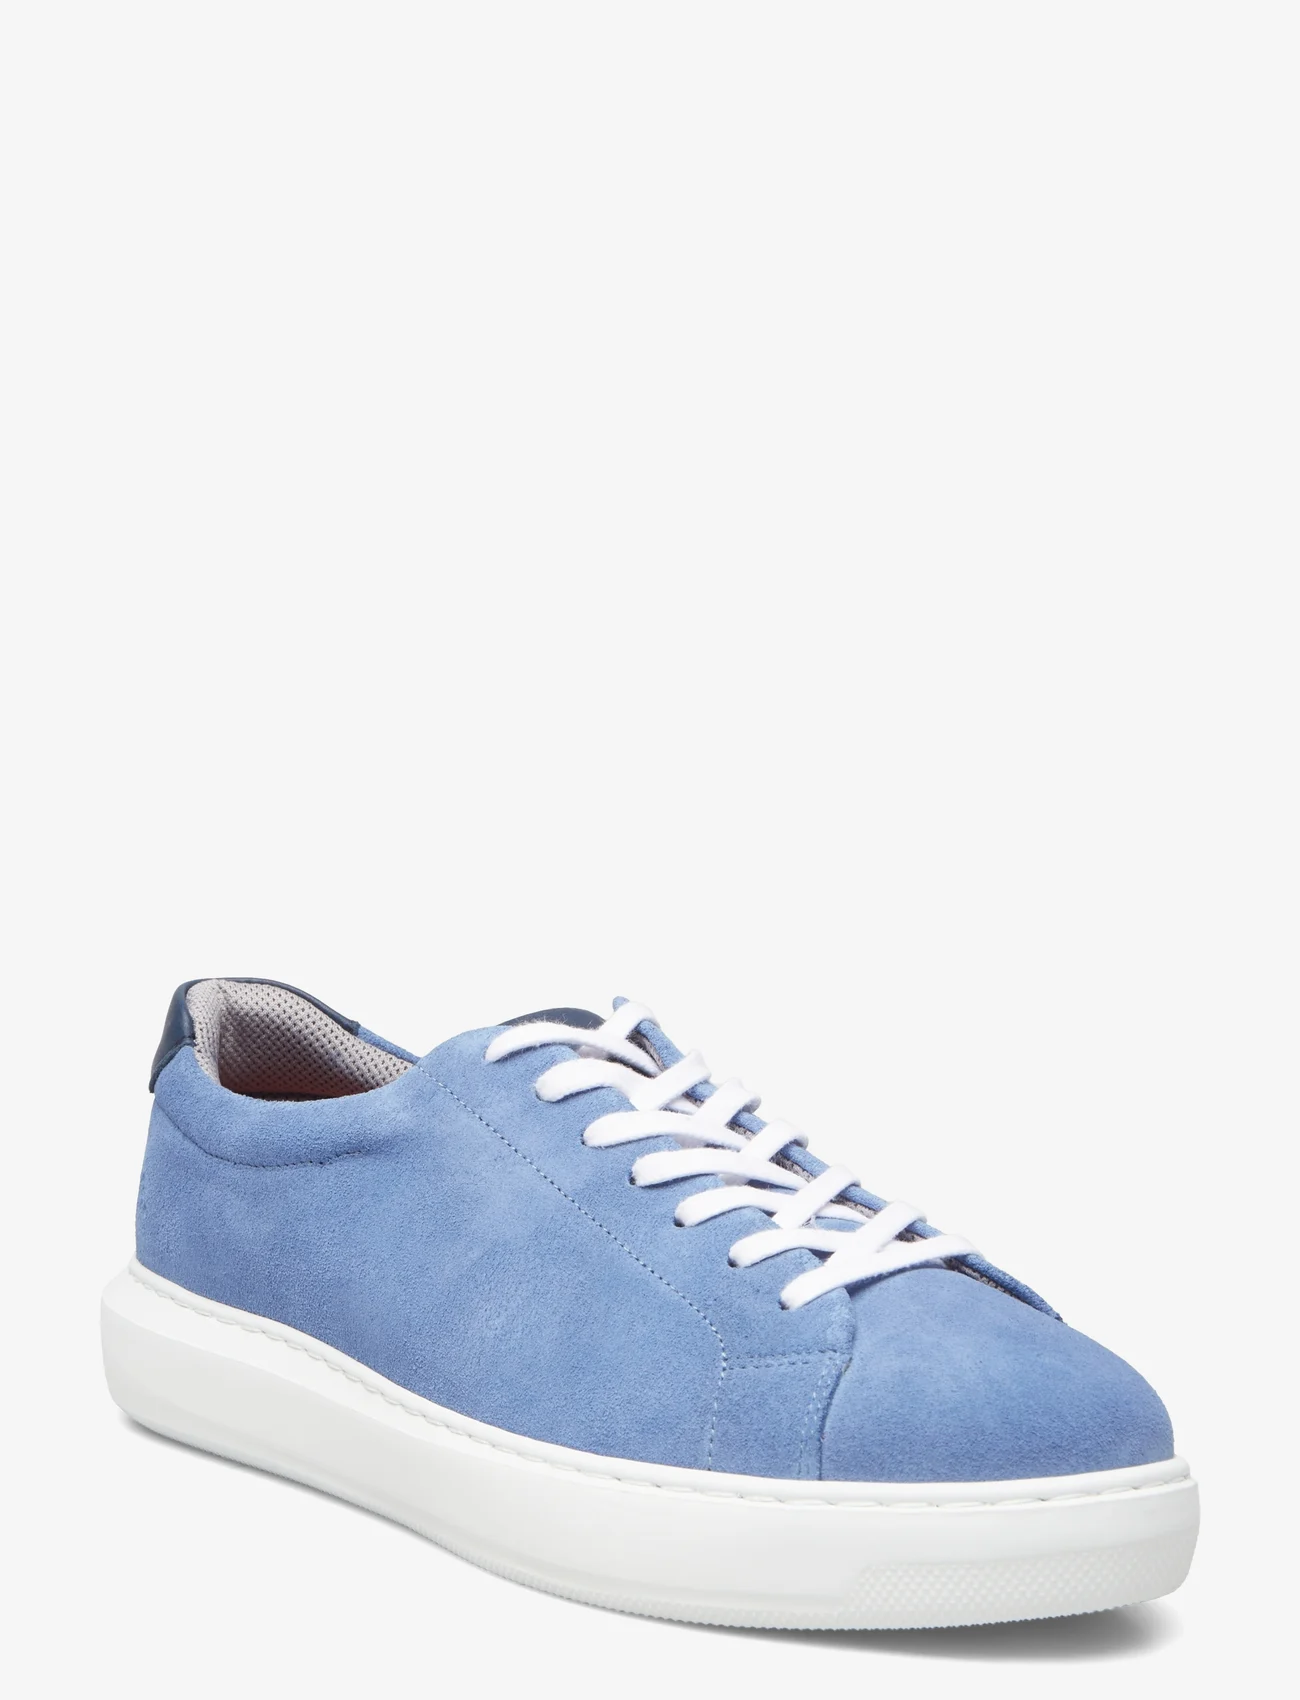 Bianco - BIAGARY Sneaker Suede - laag sneakers - blue - 0